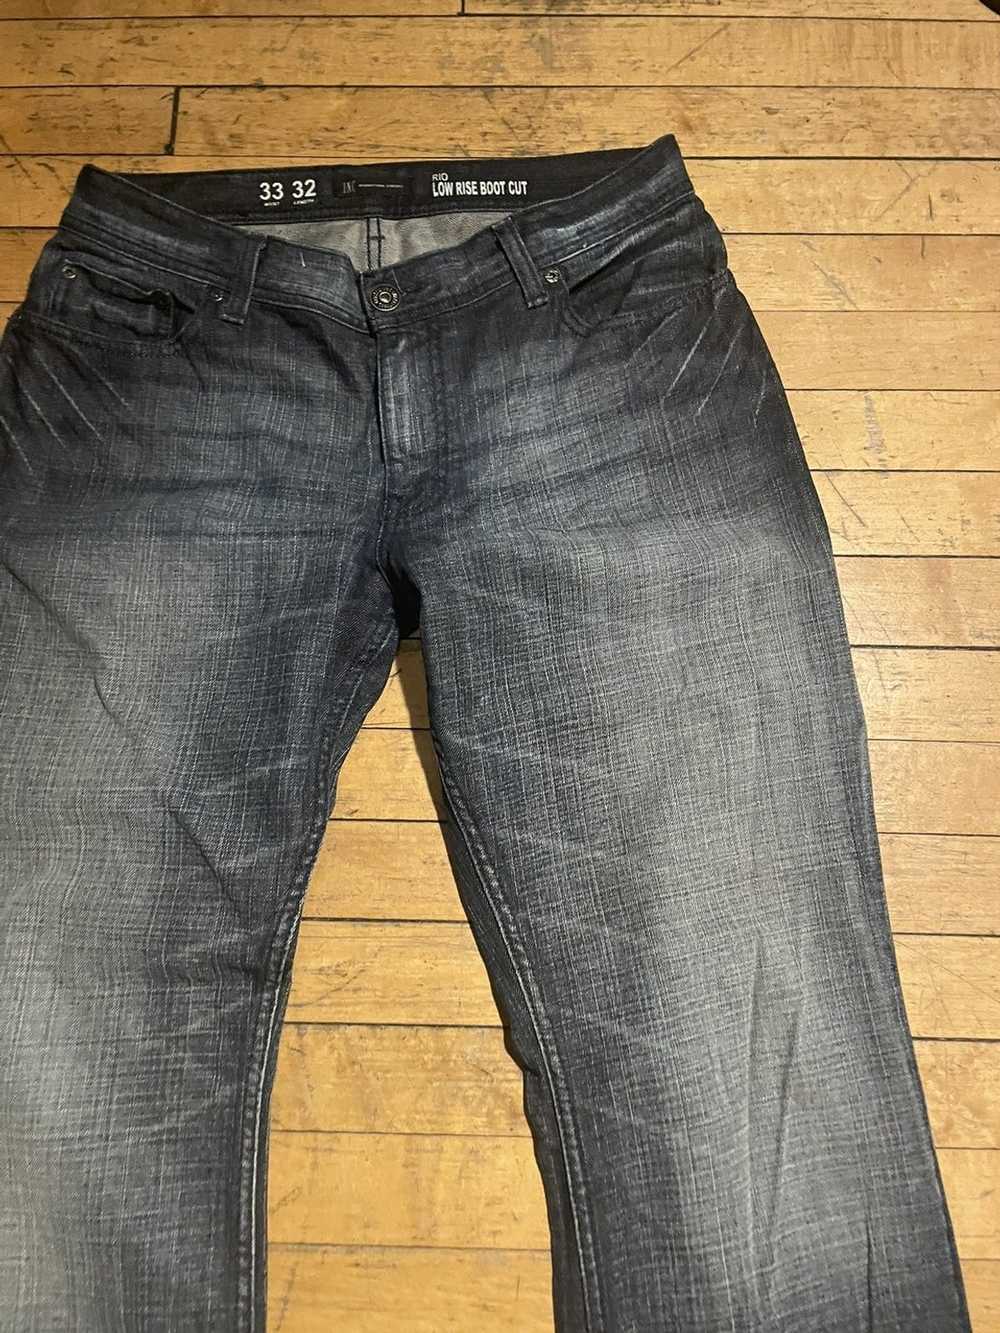 Streetwear low rise boot cut jeans - image 6